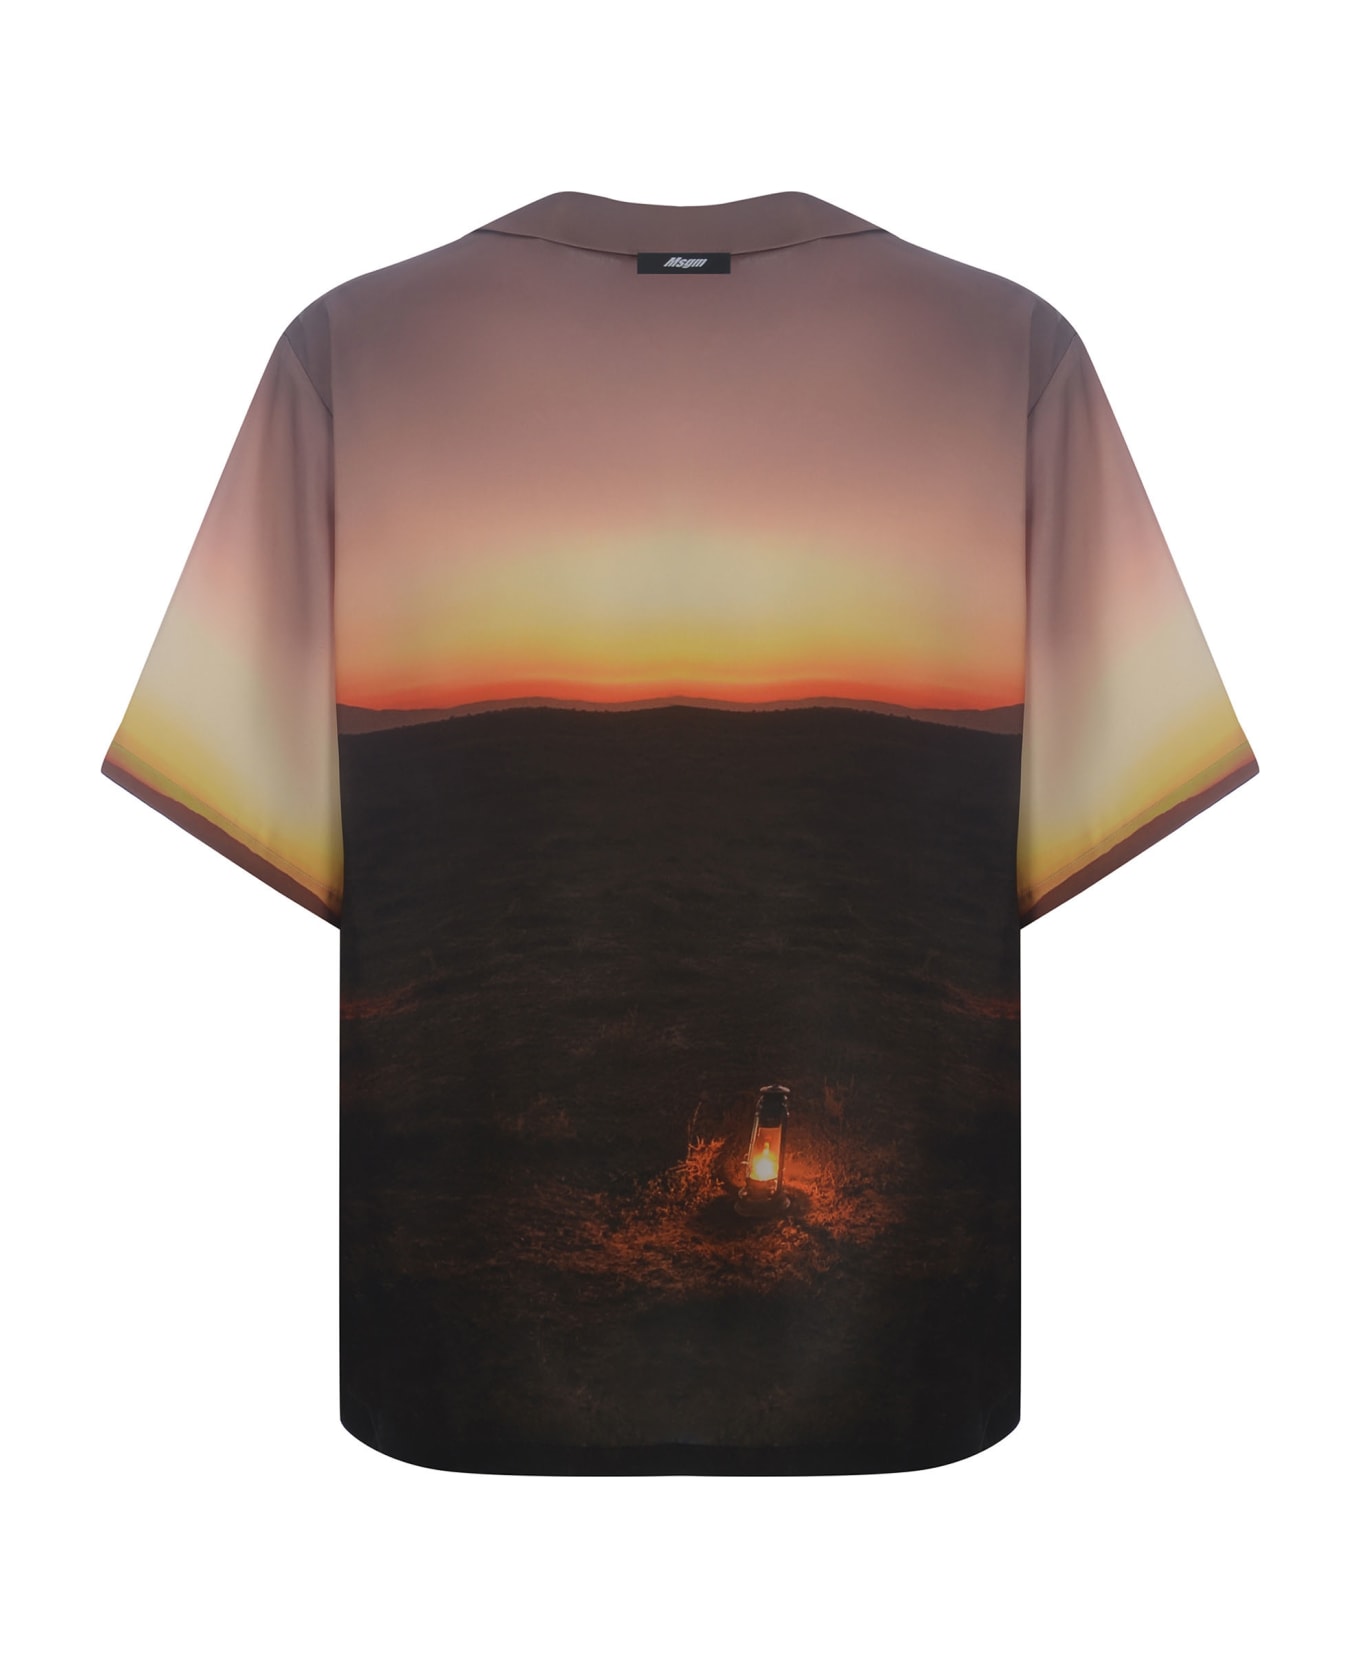 MSGM Shirt Msgm "sunset" Made Of Fluid Fabric - Multicolor